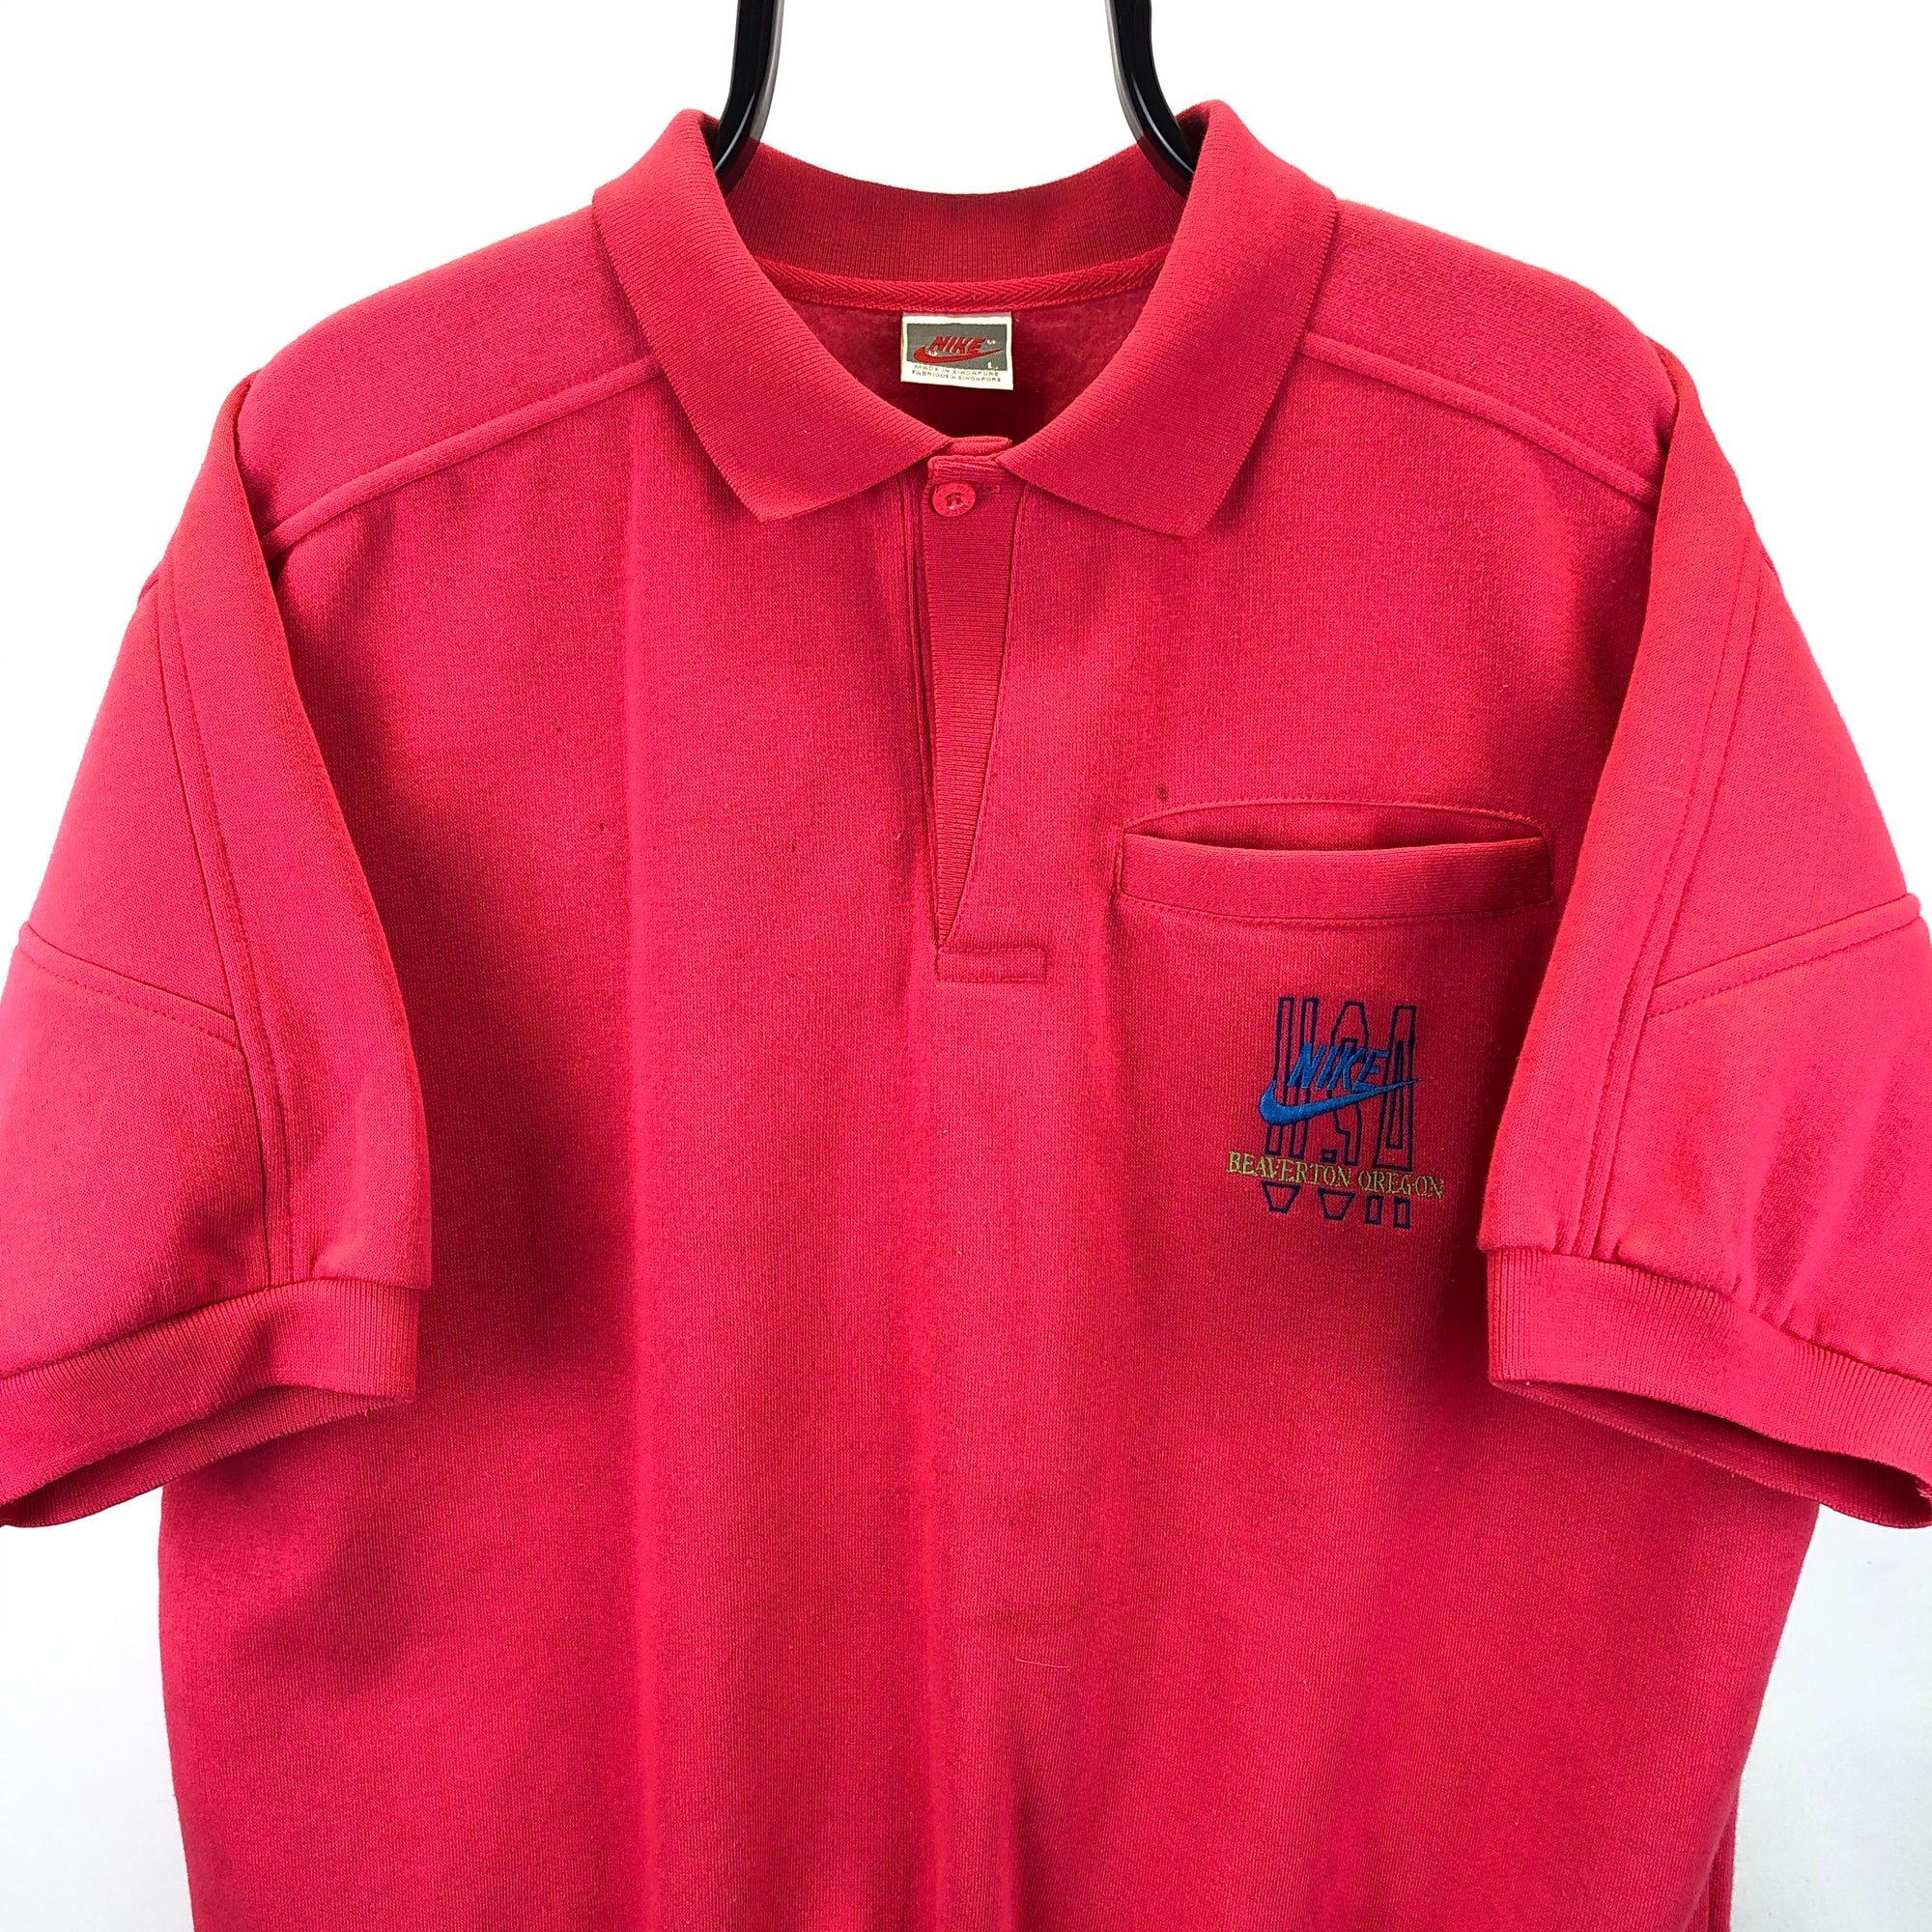 Vintage 80s Nike Short Sleeve Sweatshirt in Pink - Men's Large/Women's XL